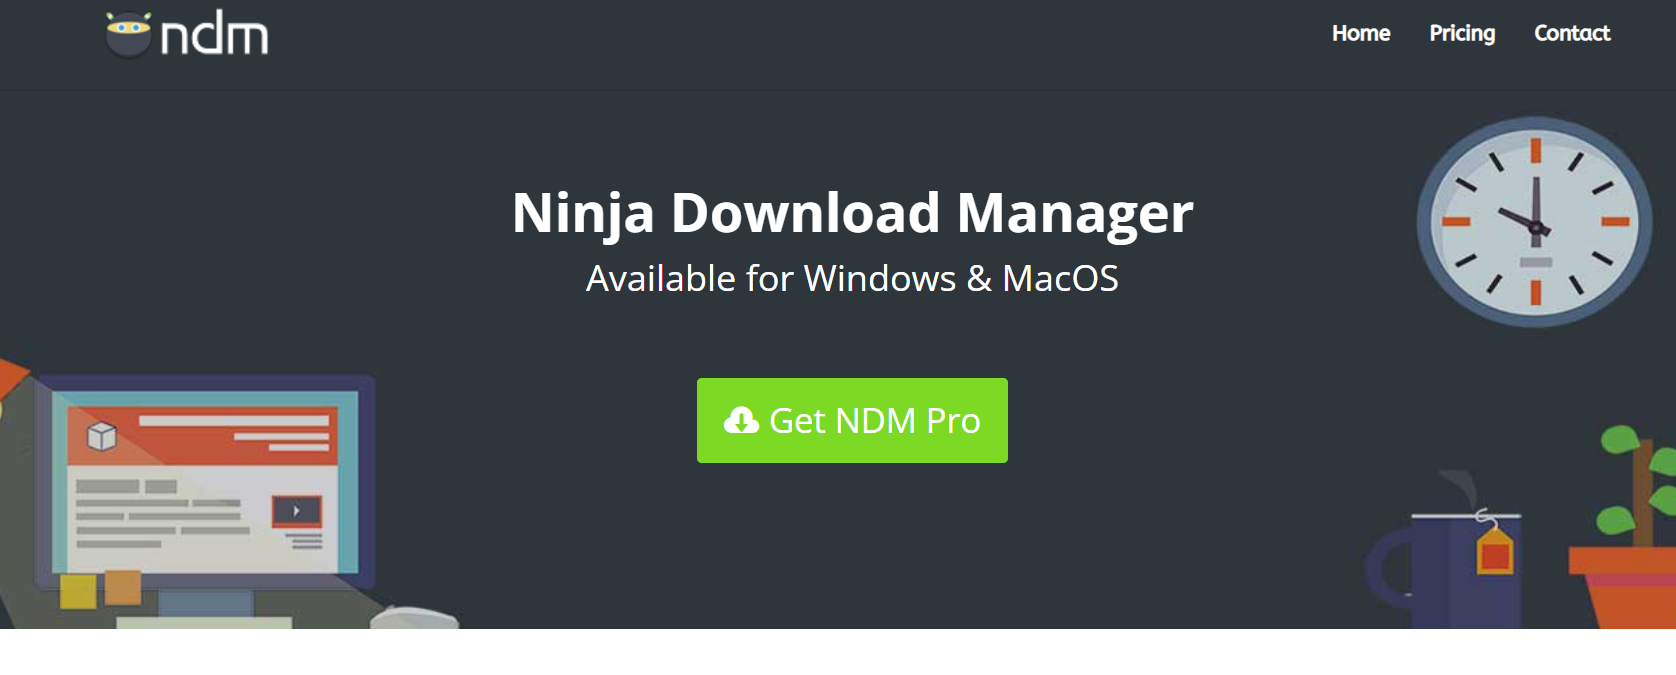 Ninja download manager